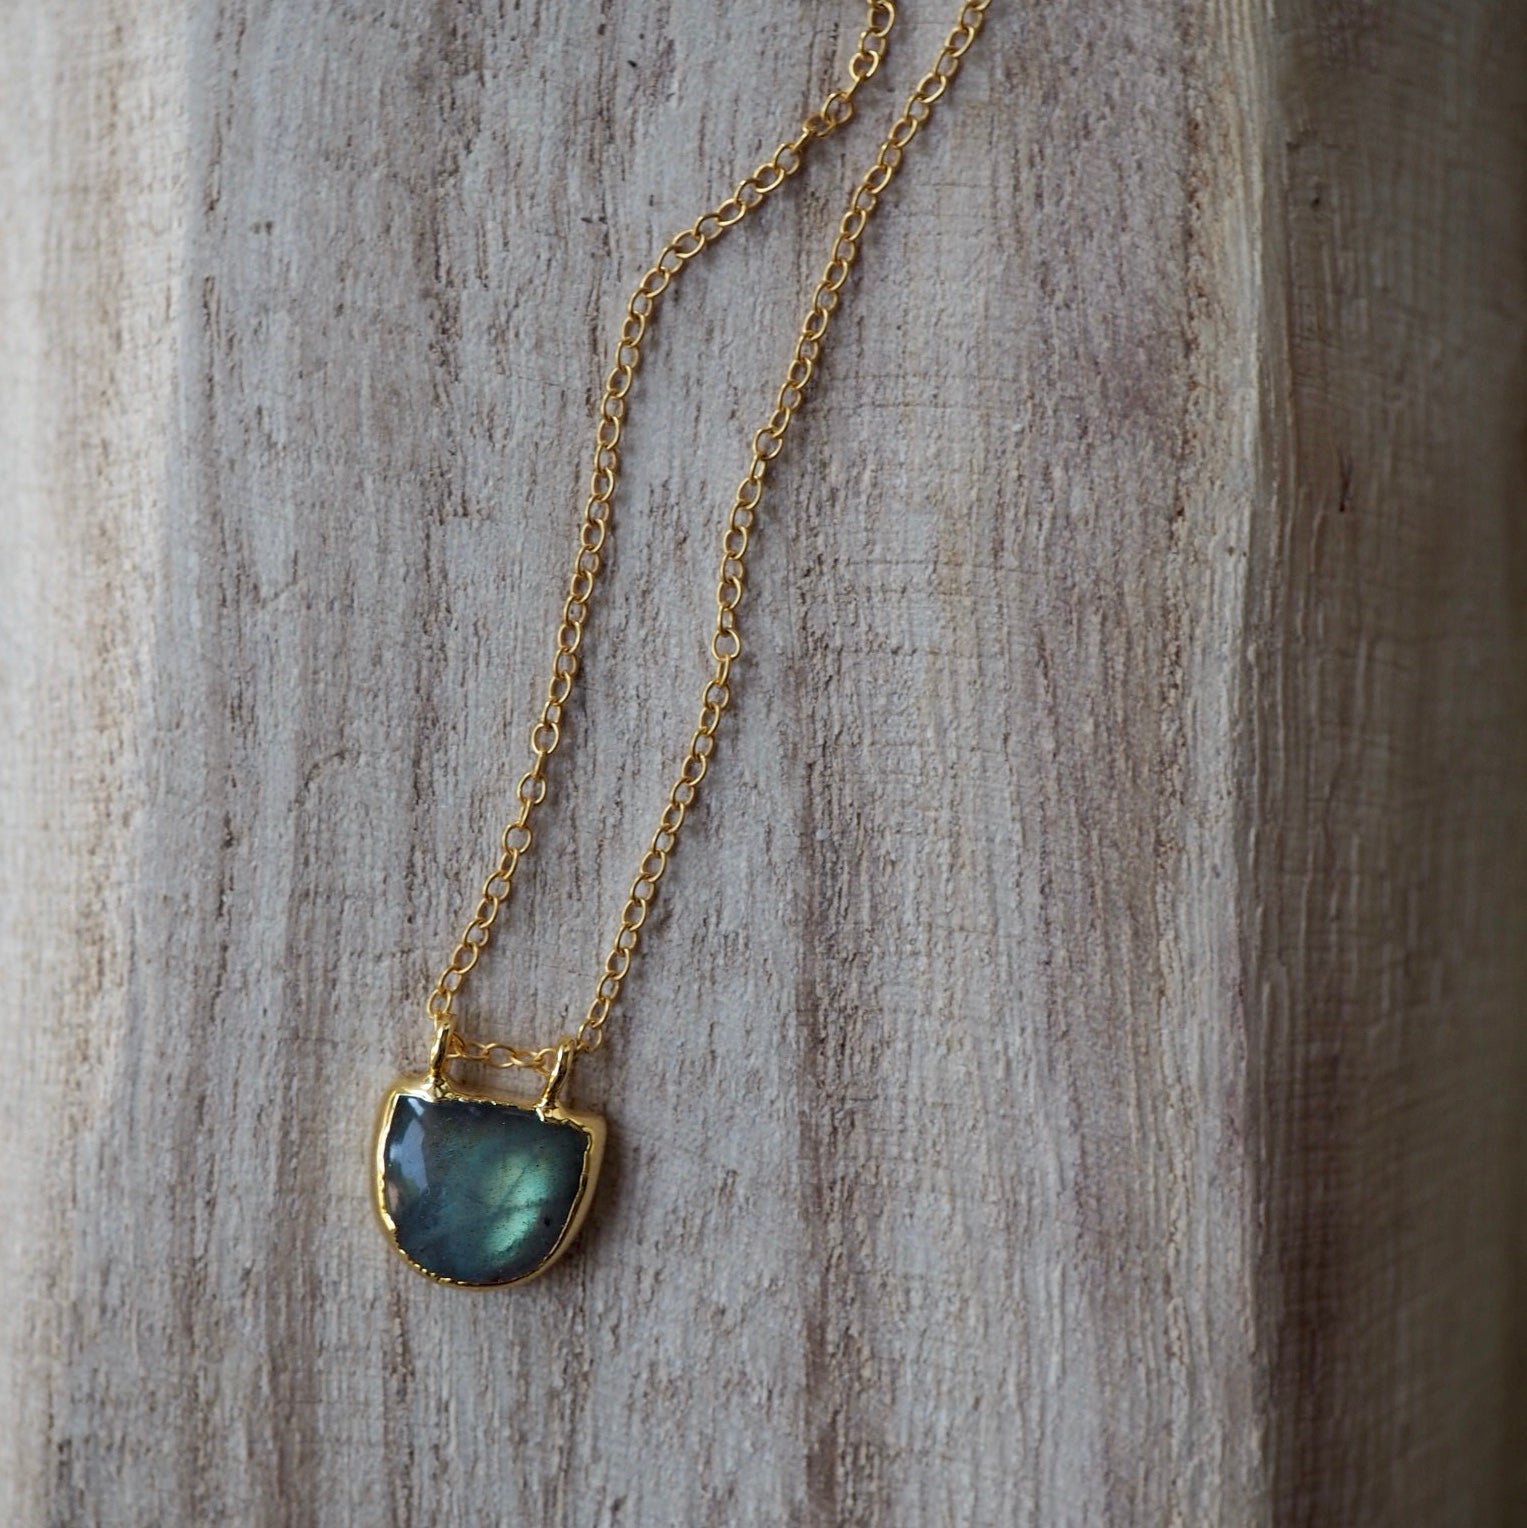 Delicate gold necklace with Labradorite gemstone by Wallis Designs